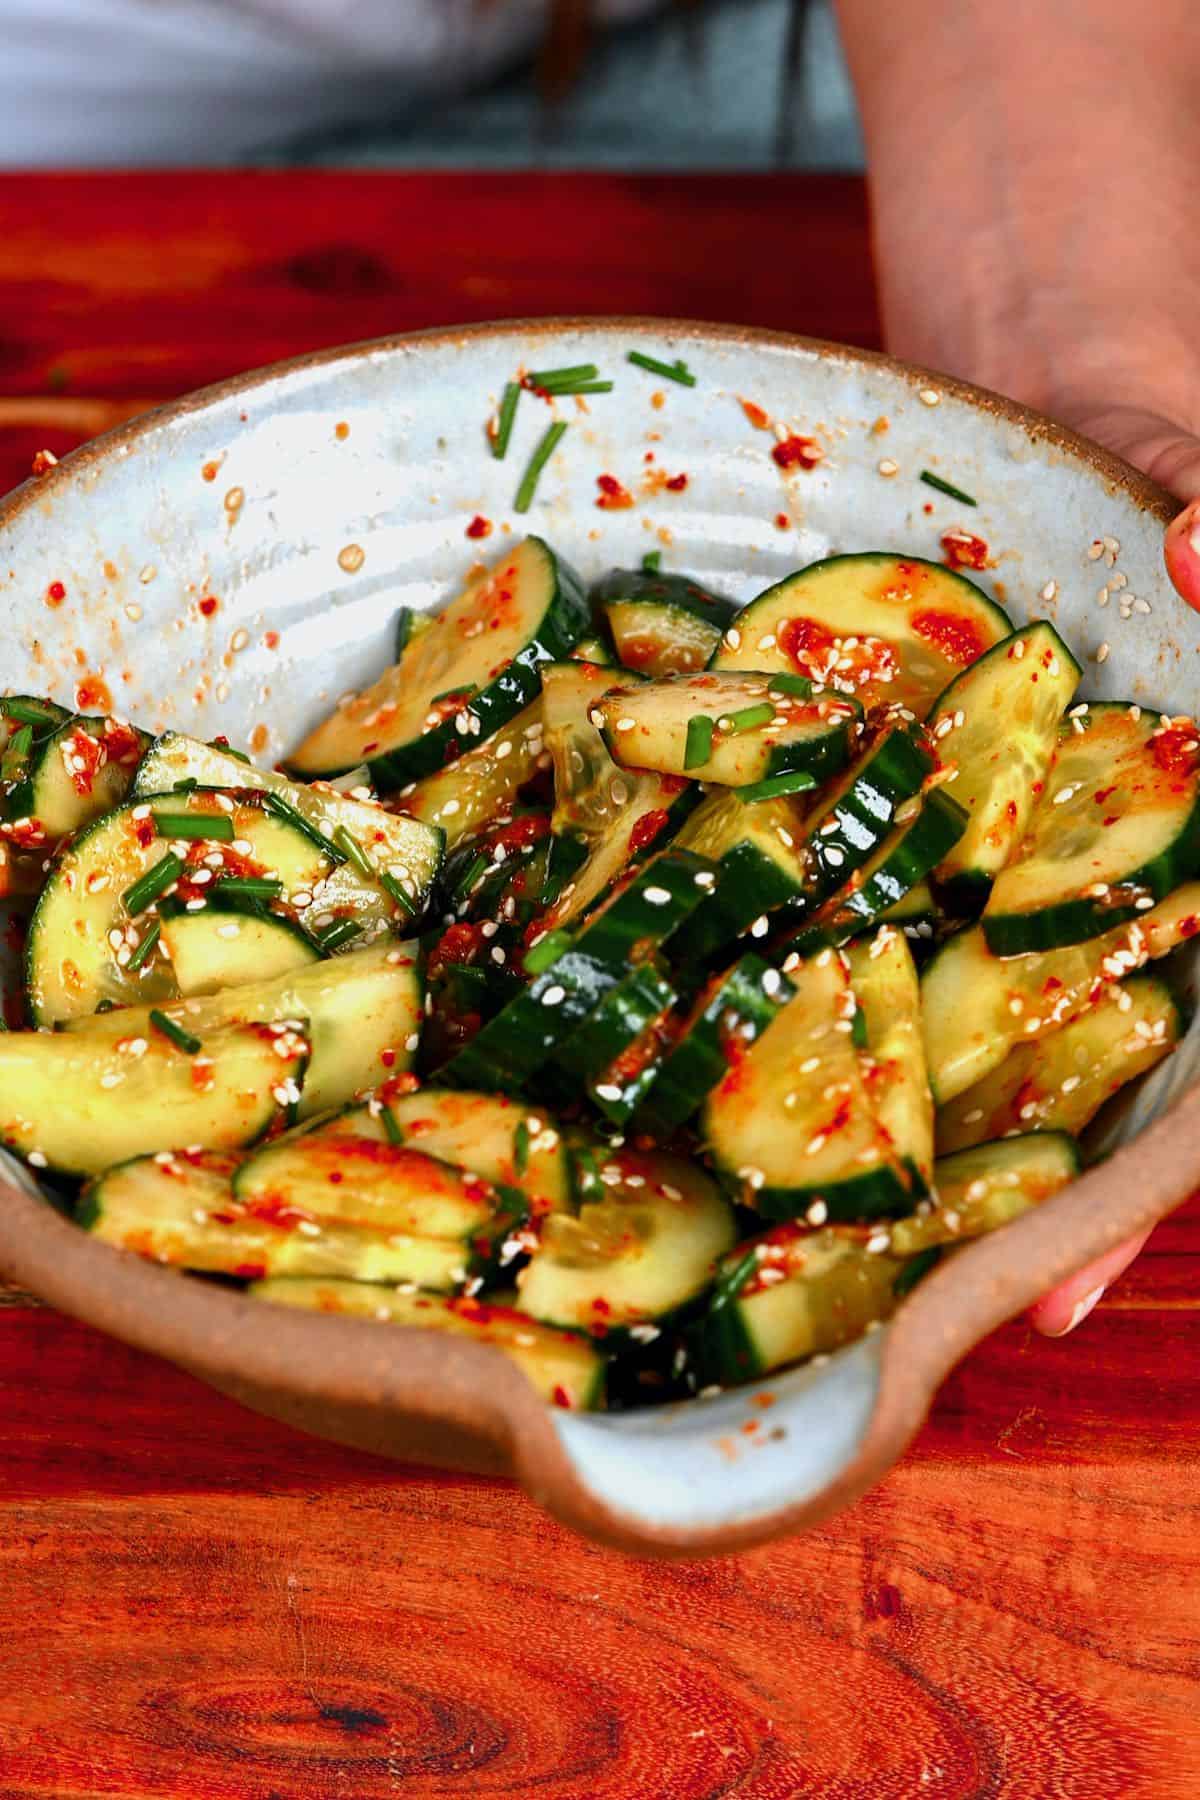 A bowl with Korean cucumber salad